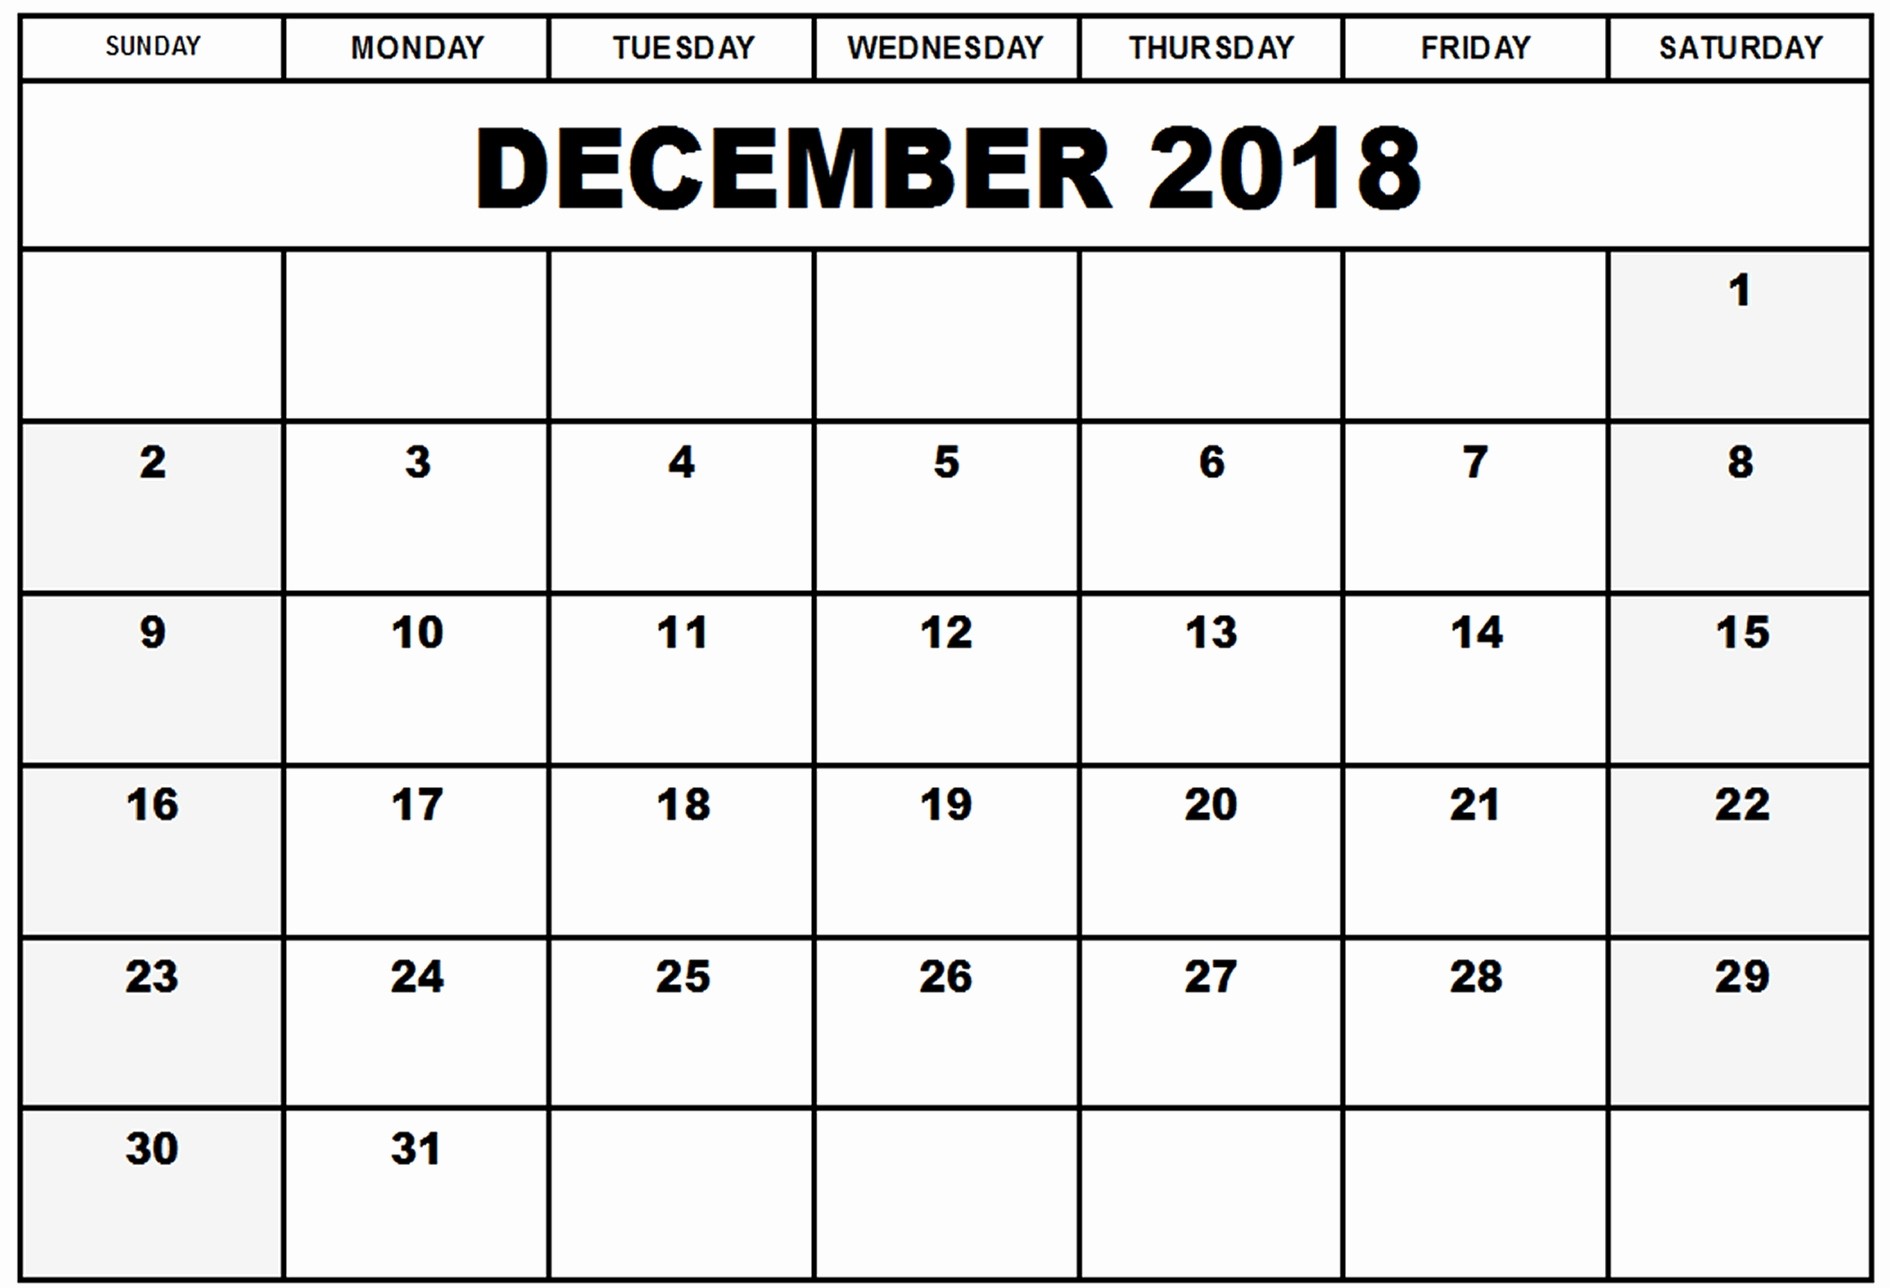 Blank Calendar Template December 2018 Awesome Blank December 2018 Calendar